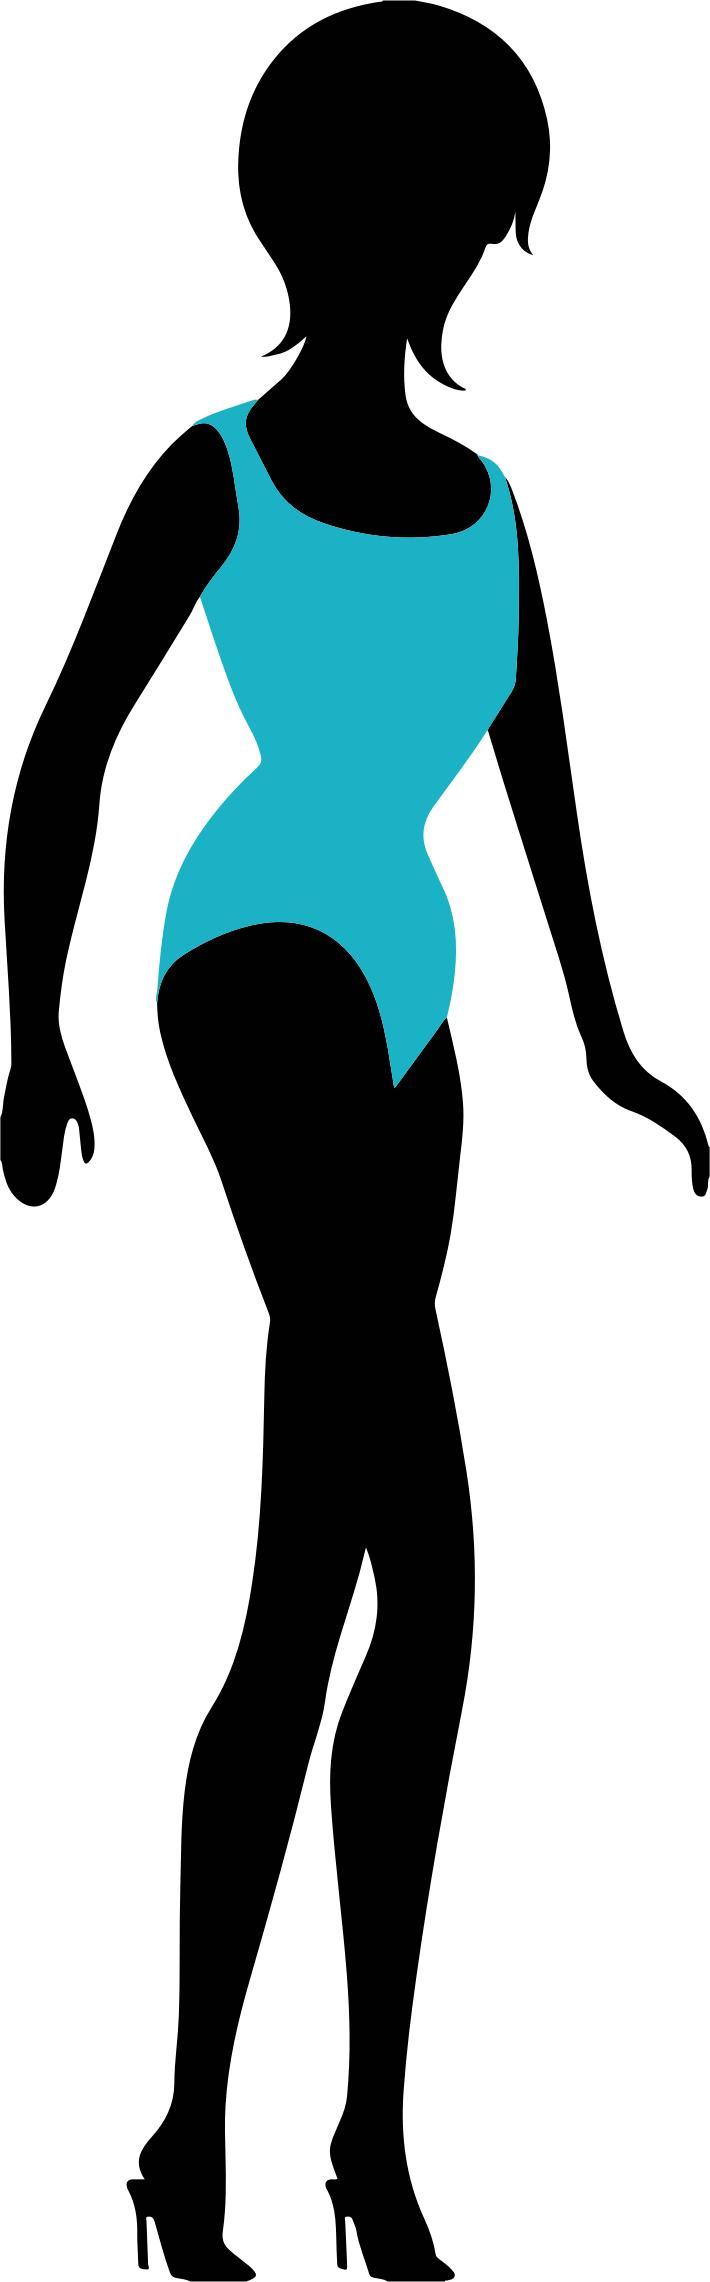 Woman In Bikini Silhouette png transparent